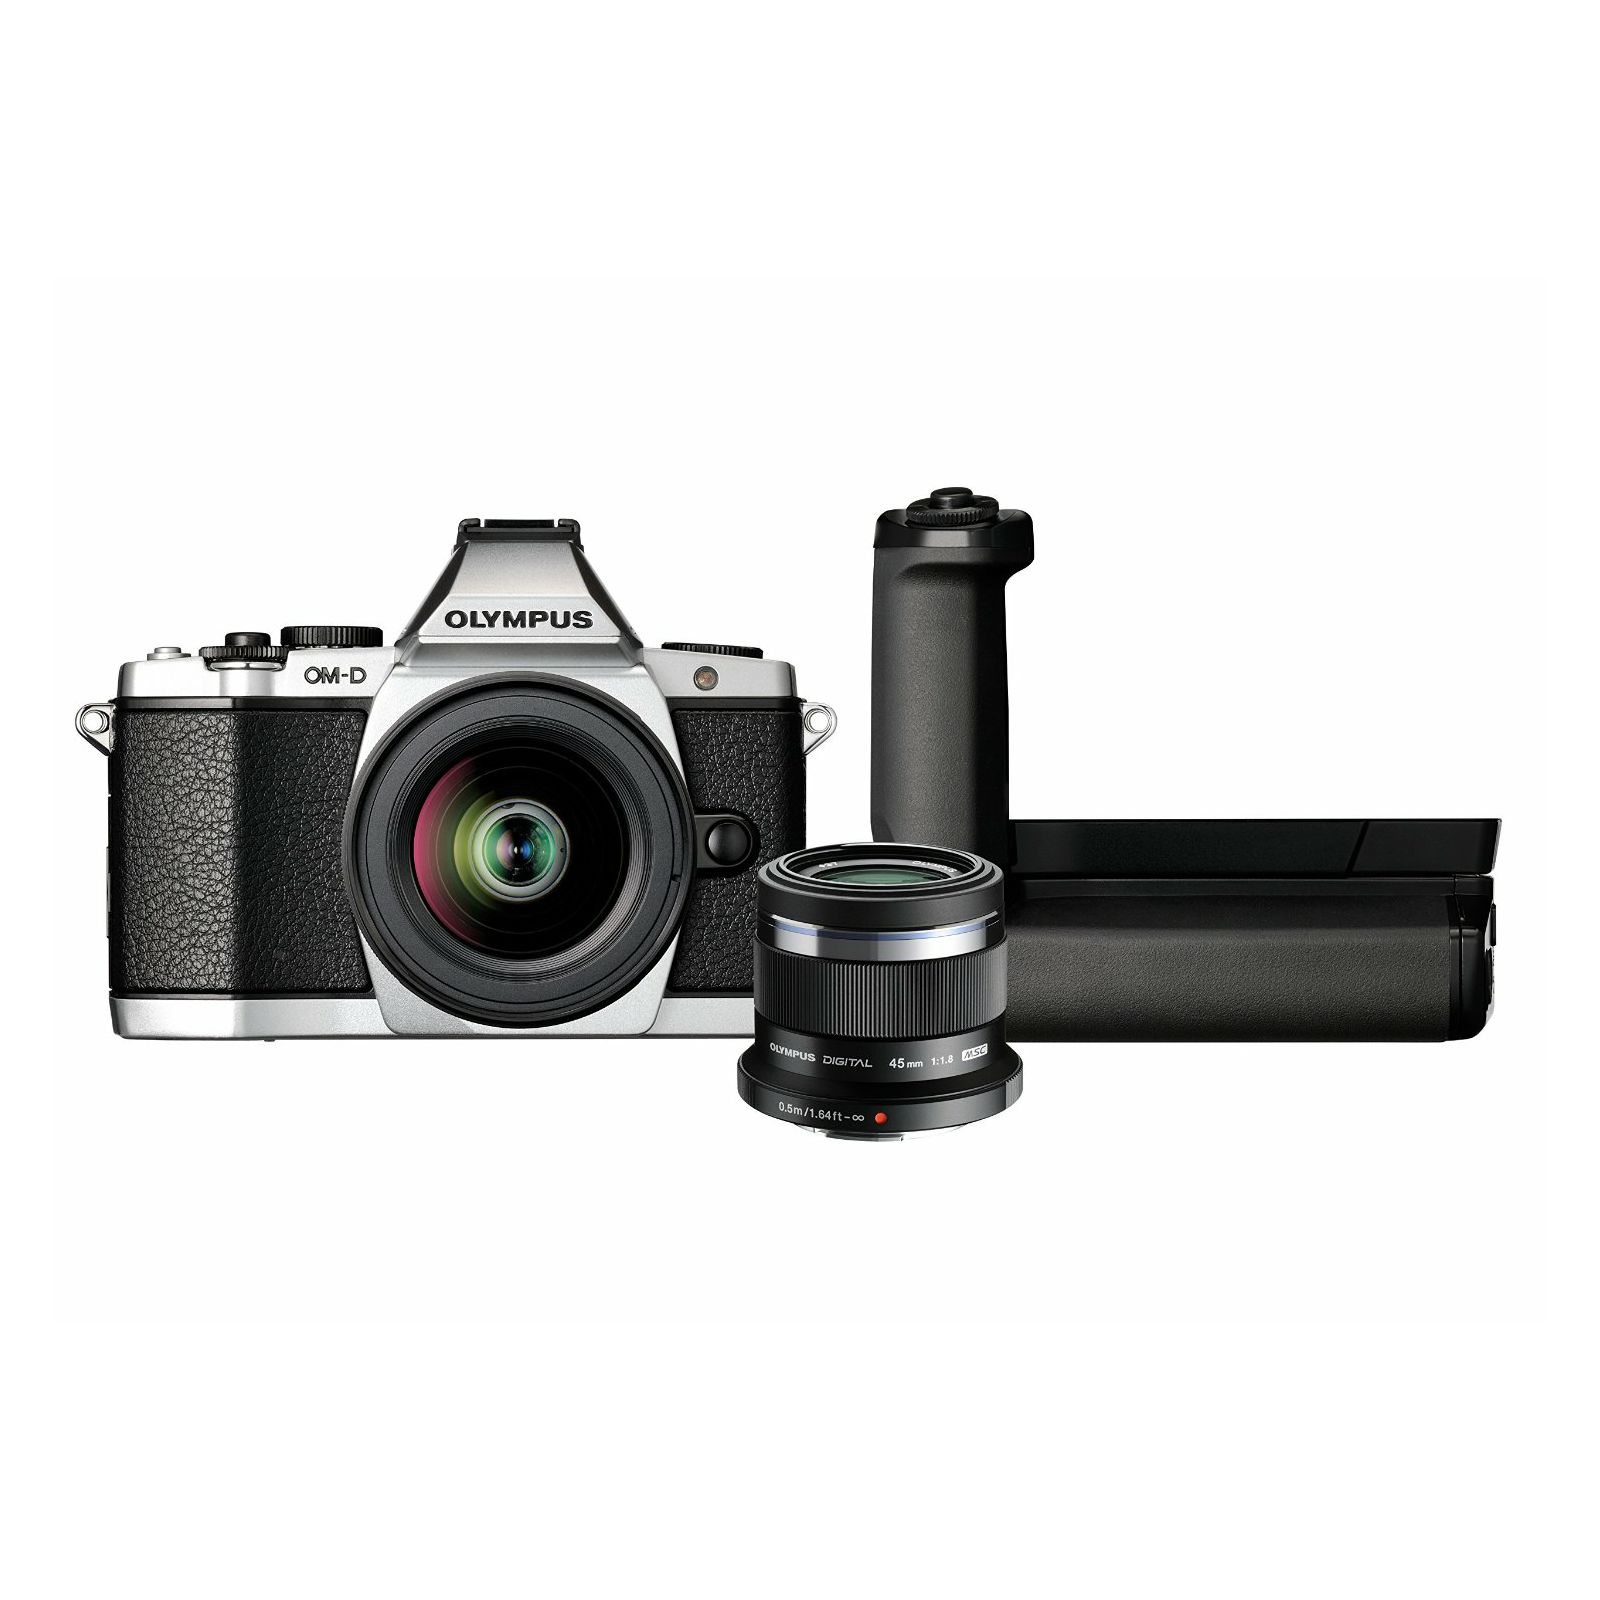 Olympus E-M5 Portrait Grip Kit slv (1250, 4518, HLD-6) blk lenses Micro Four Thirds MFT - OM-D Camera digitalni fotoaparat V204045SE050